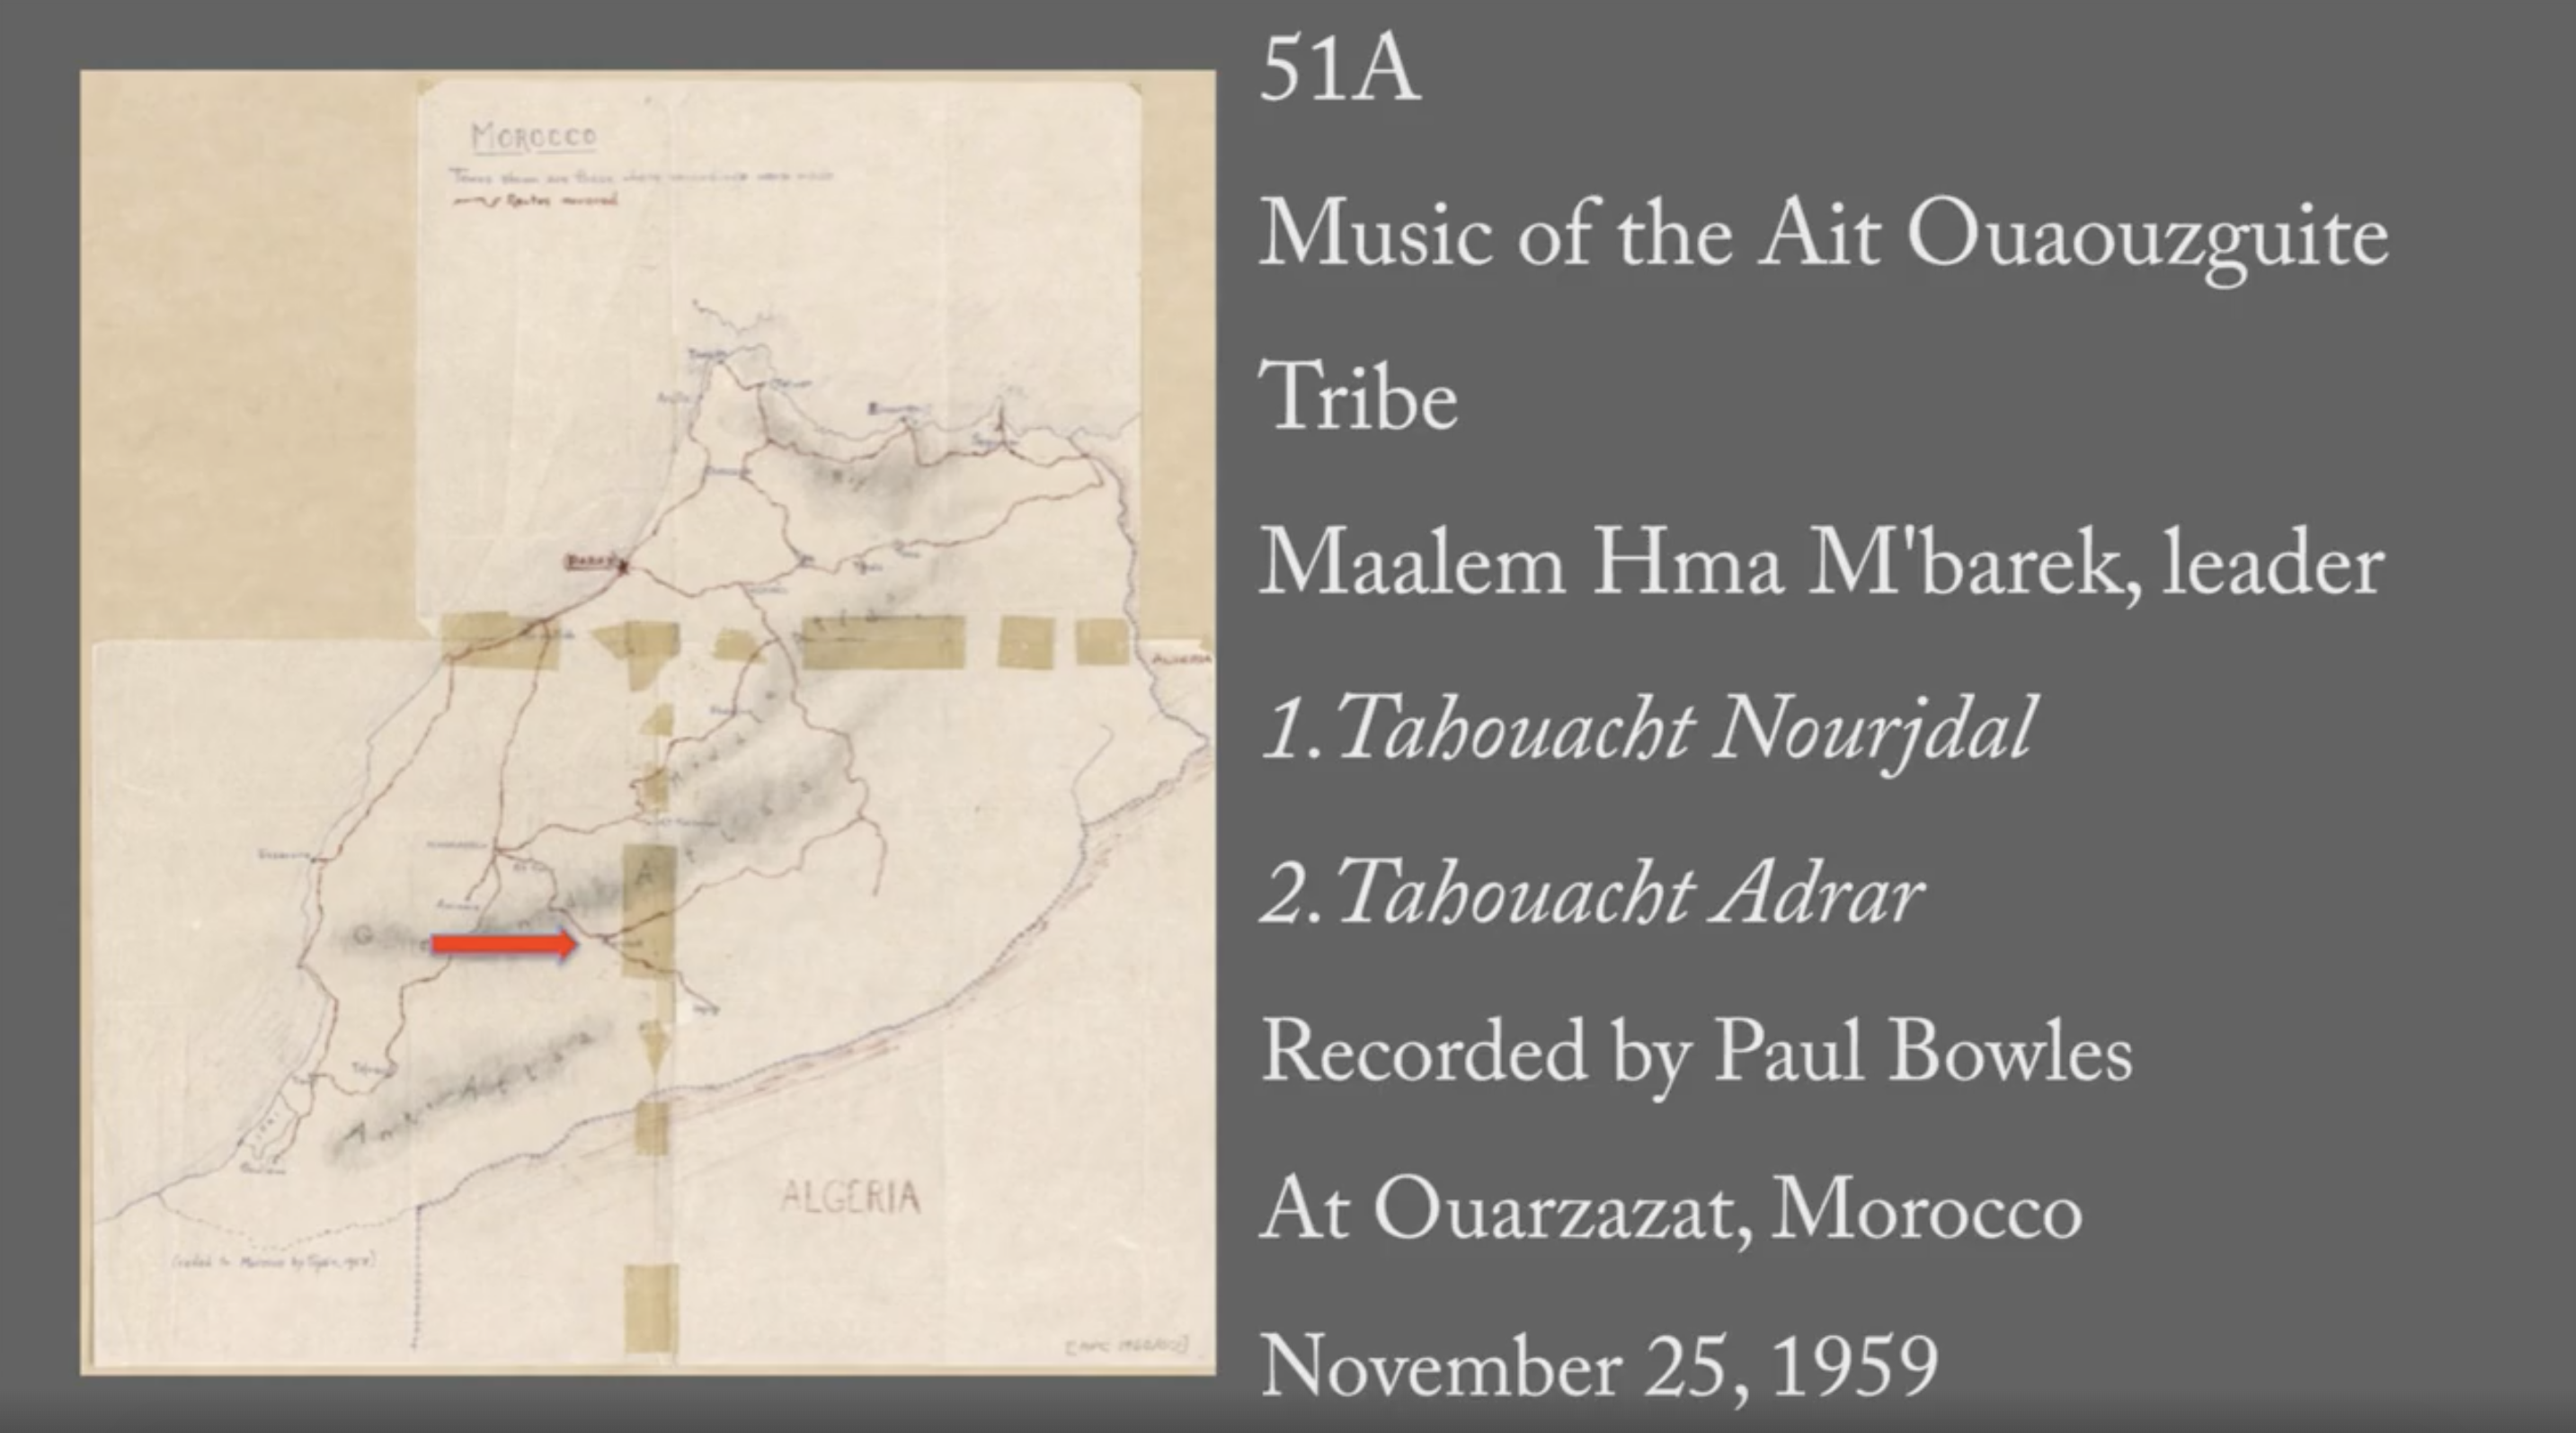 51A: "Tahouacht Nourjdal" (Music of the Ait Ouaouzguite Tribe)